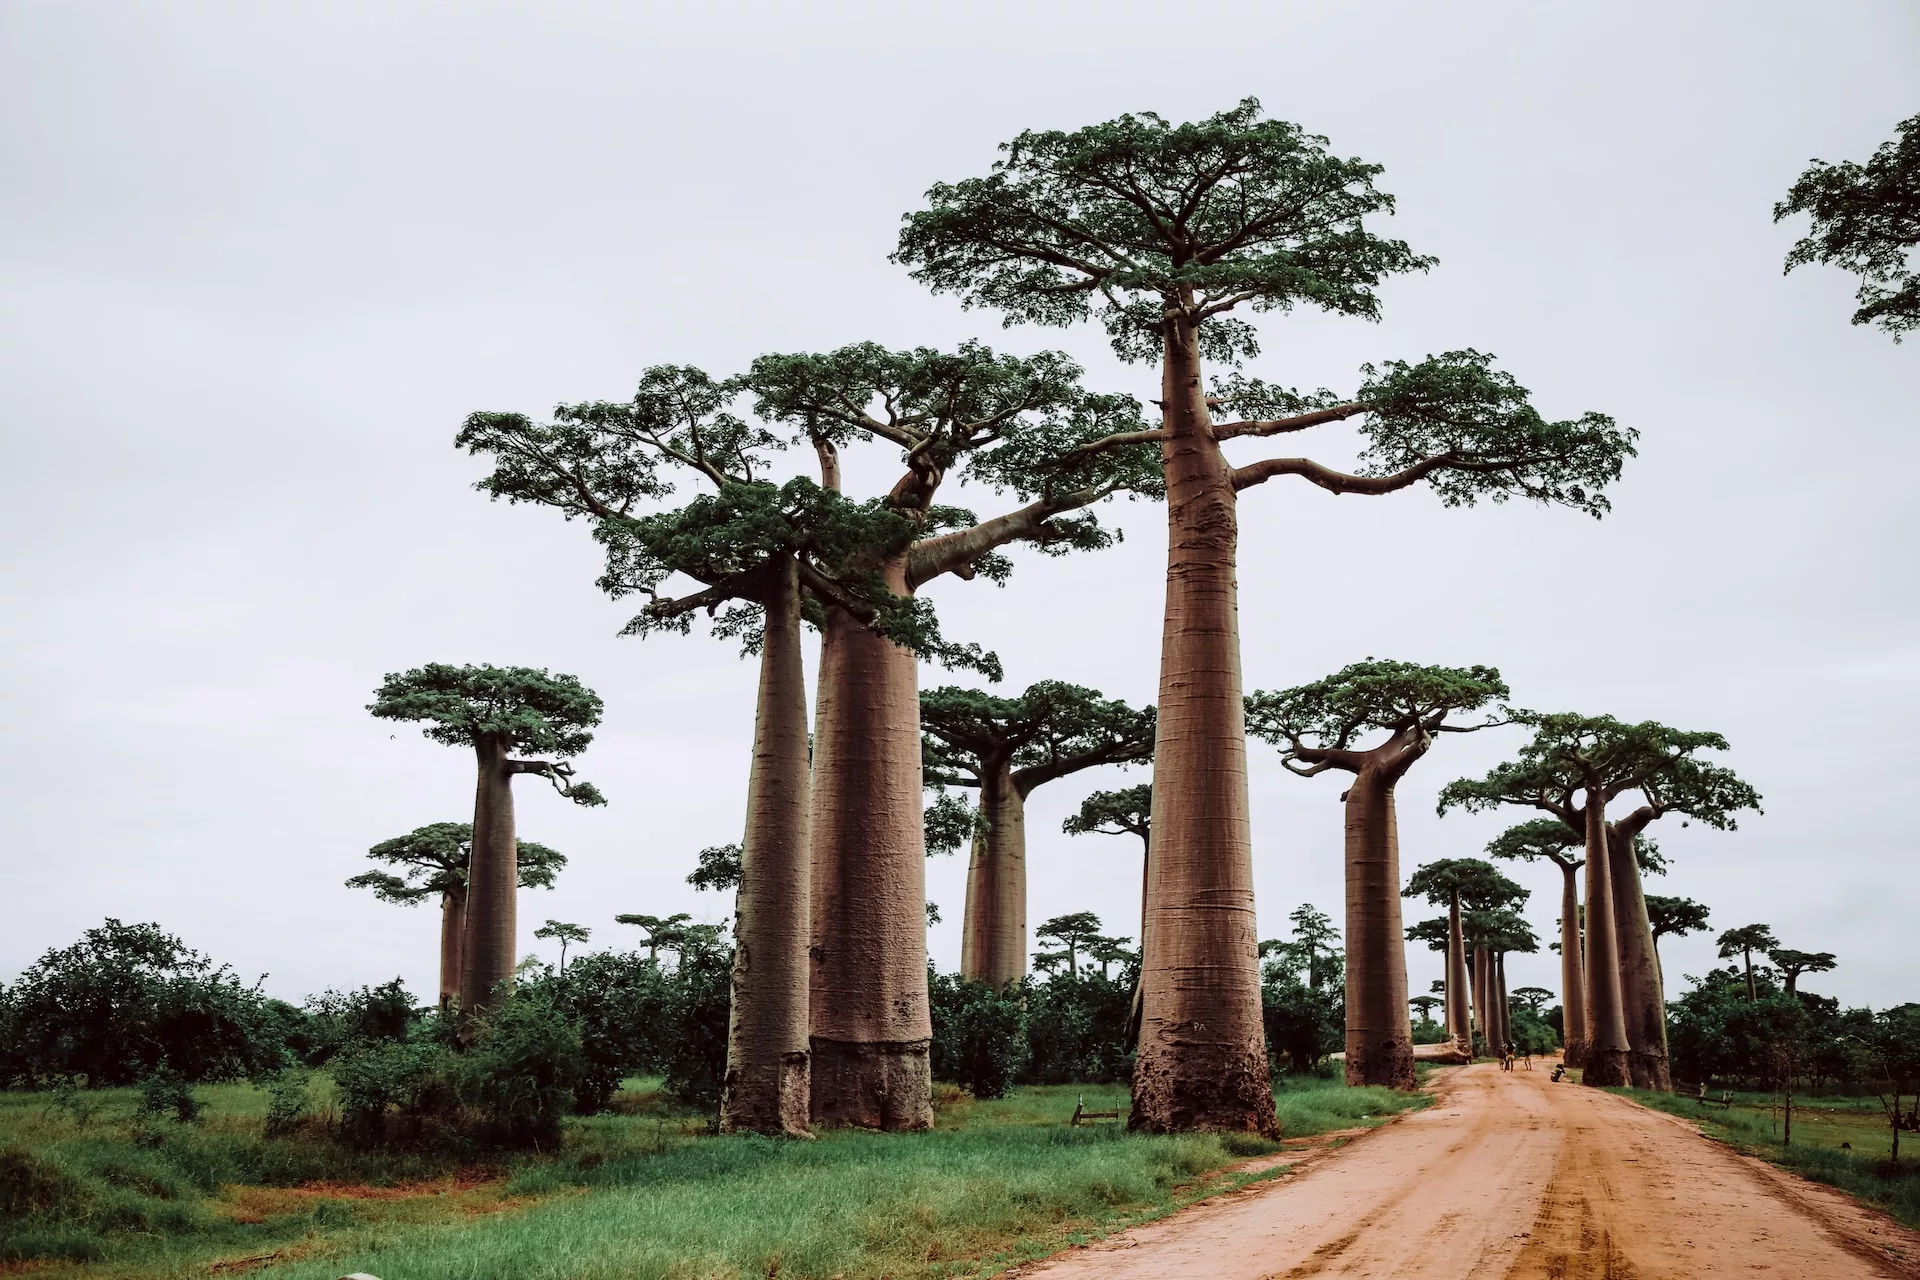 Le baobab, titan de la nature